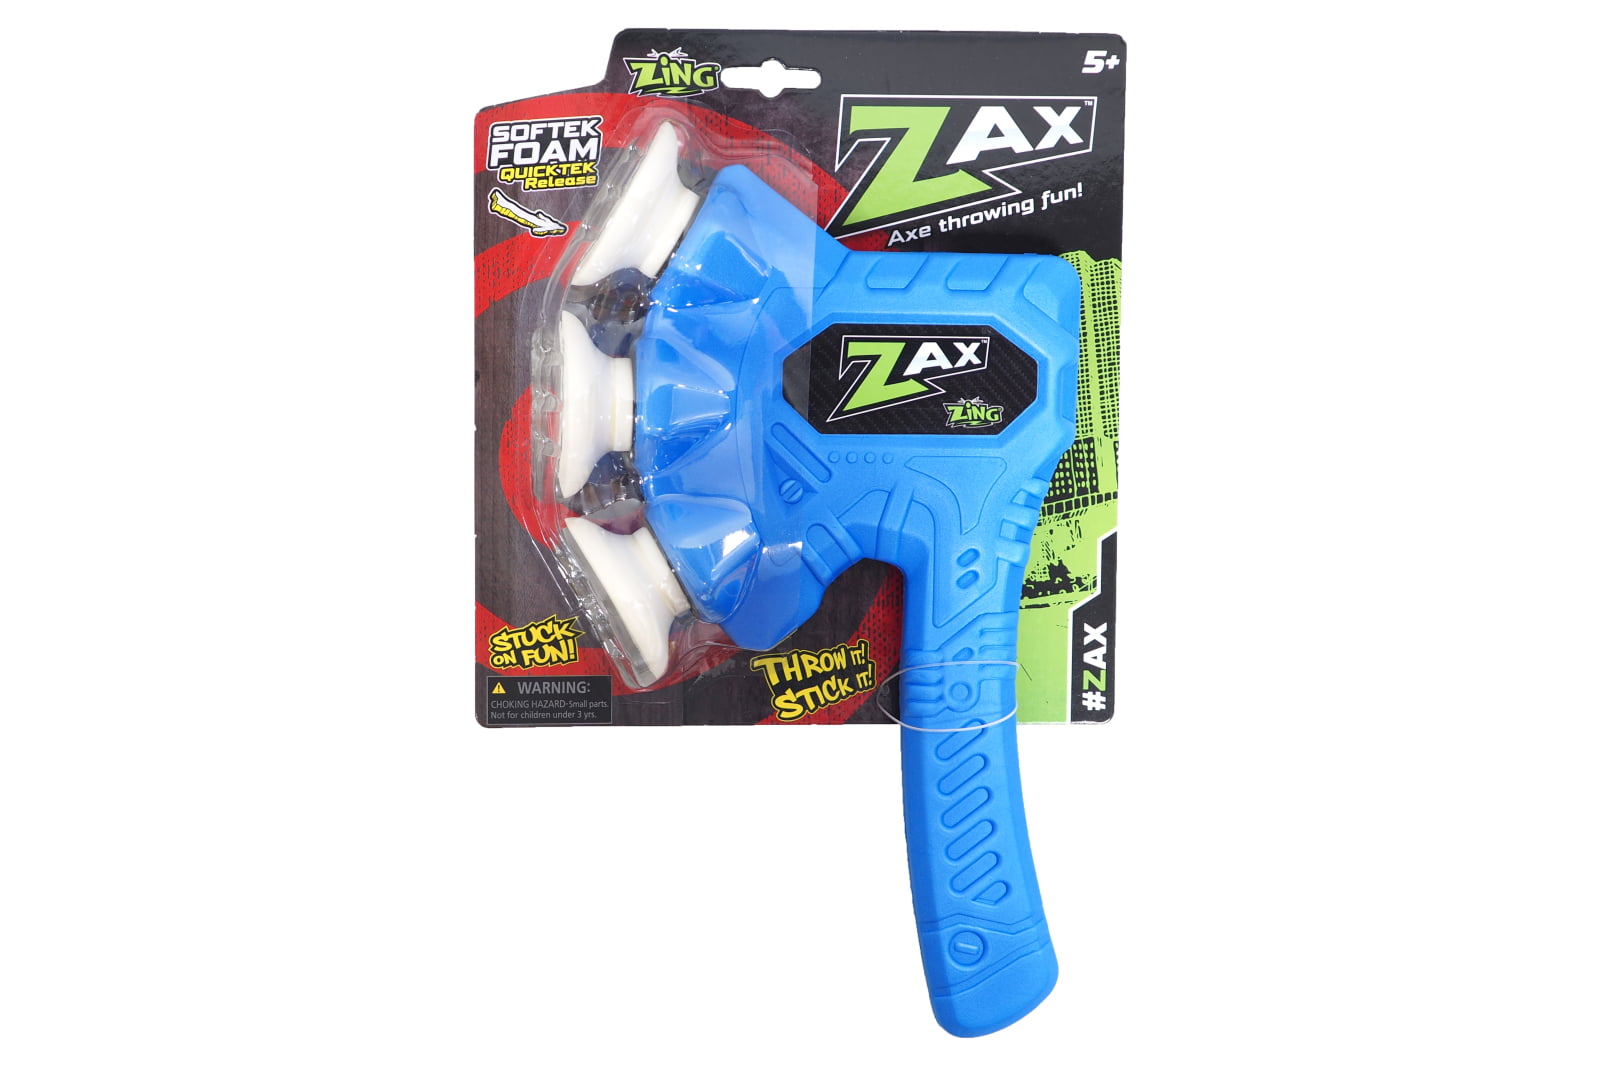 NEW Gray Zing Zax Axe Hyper Strike Soft Foam Suction Throwing Toy 